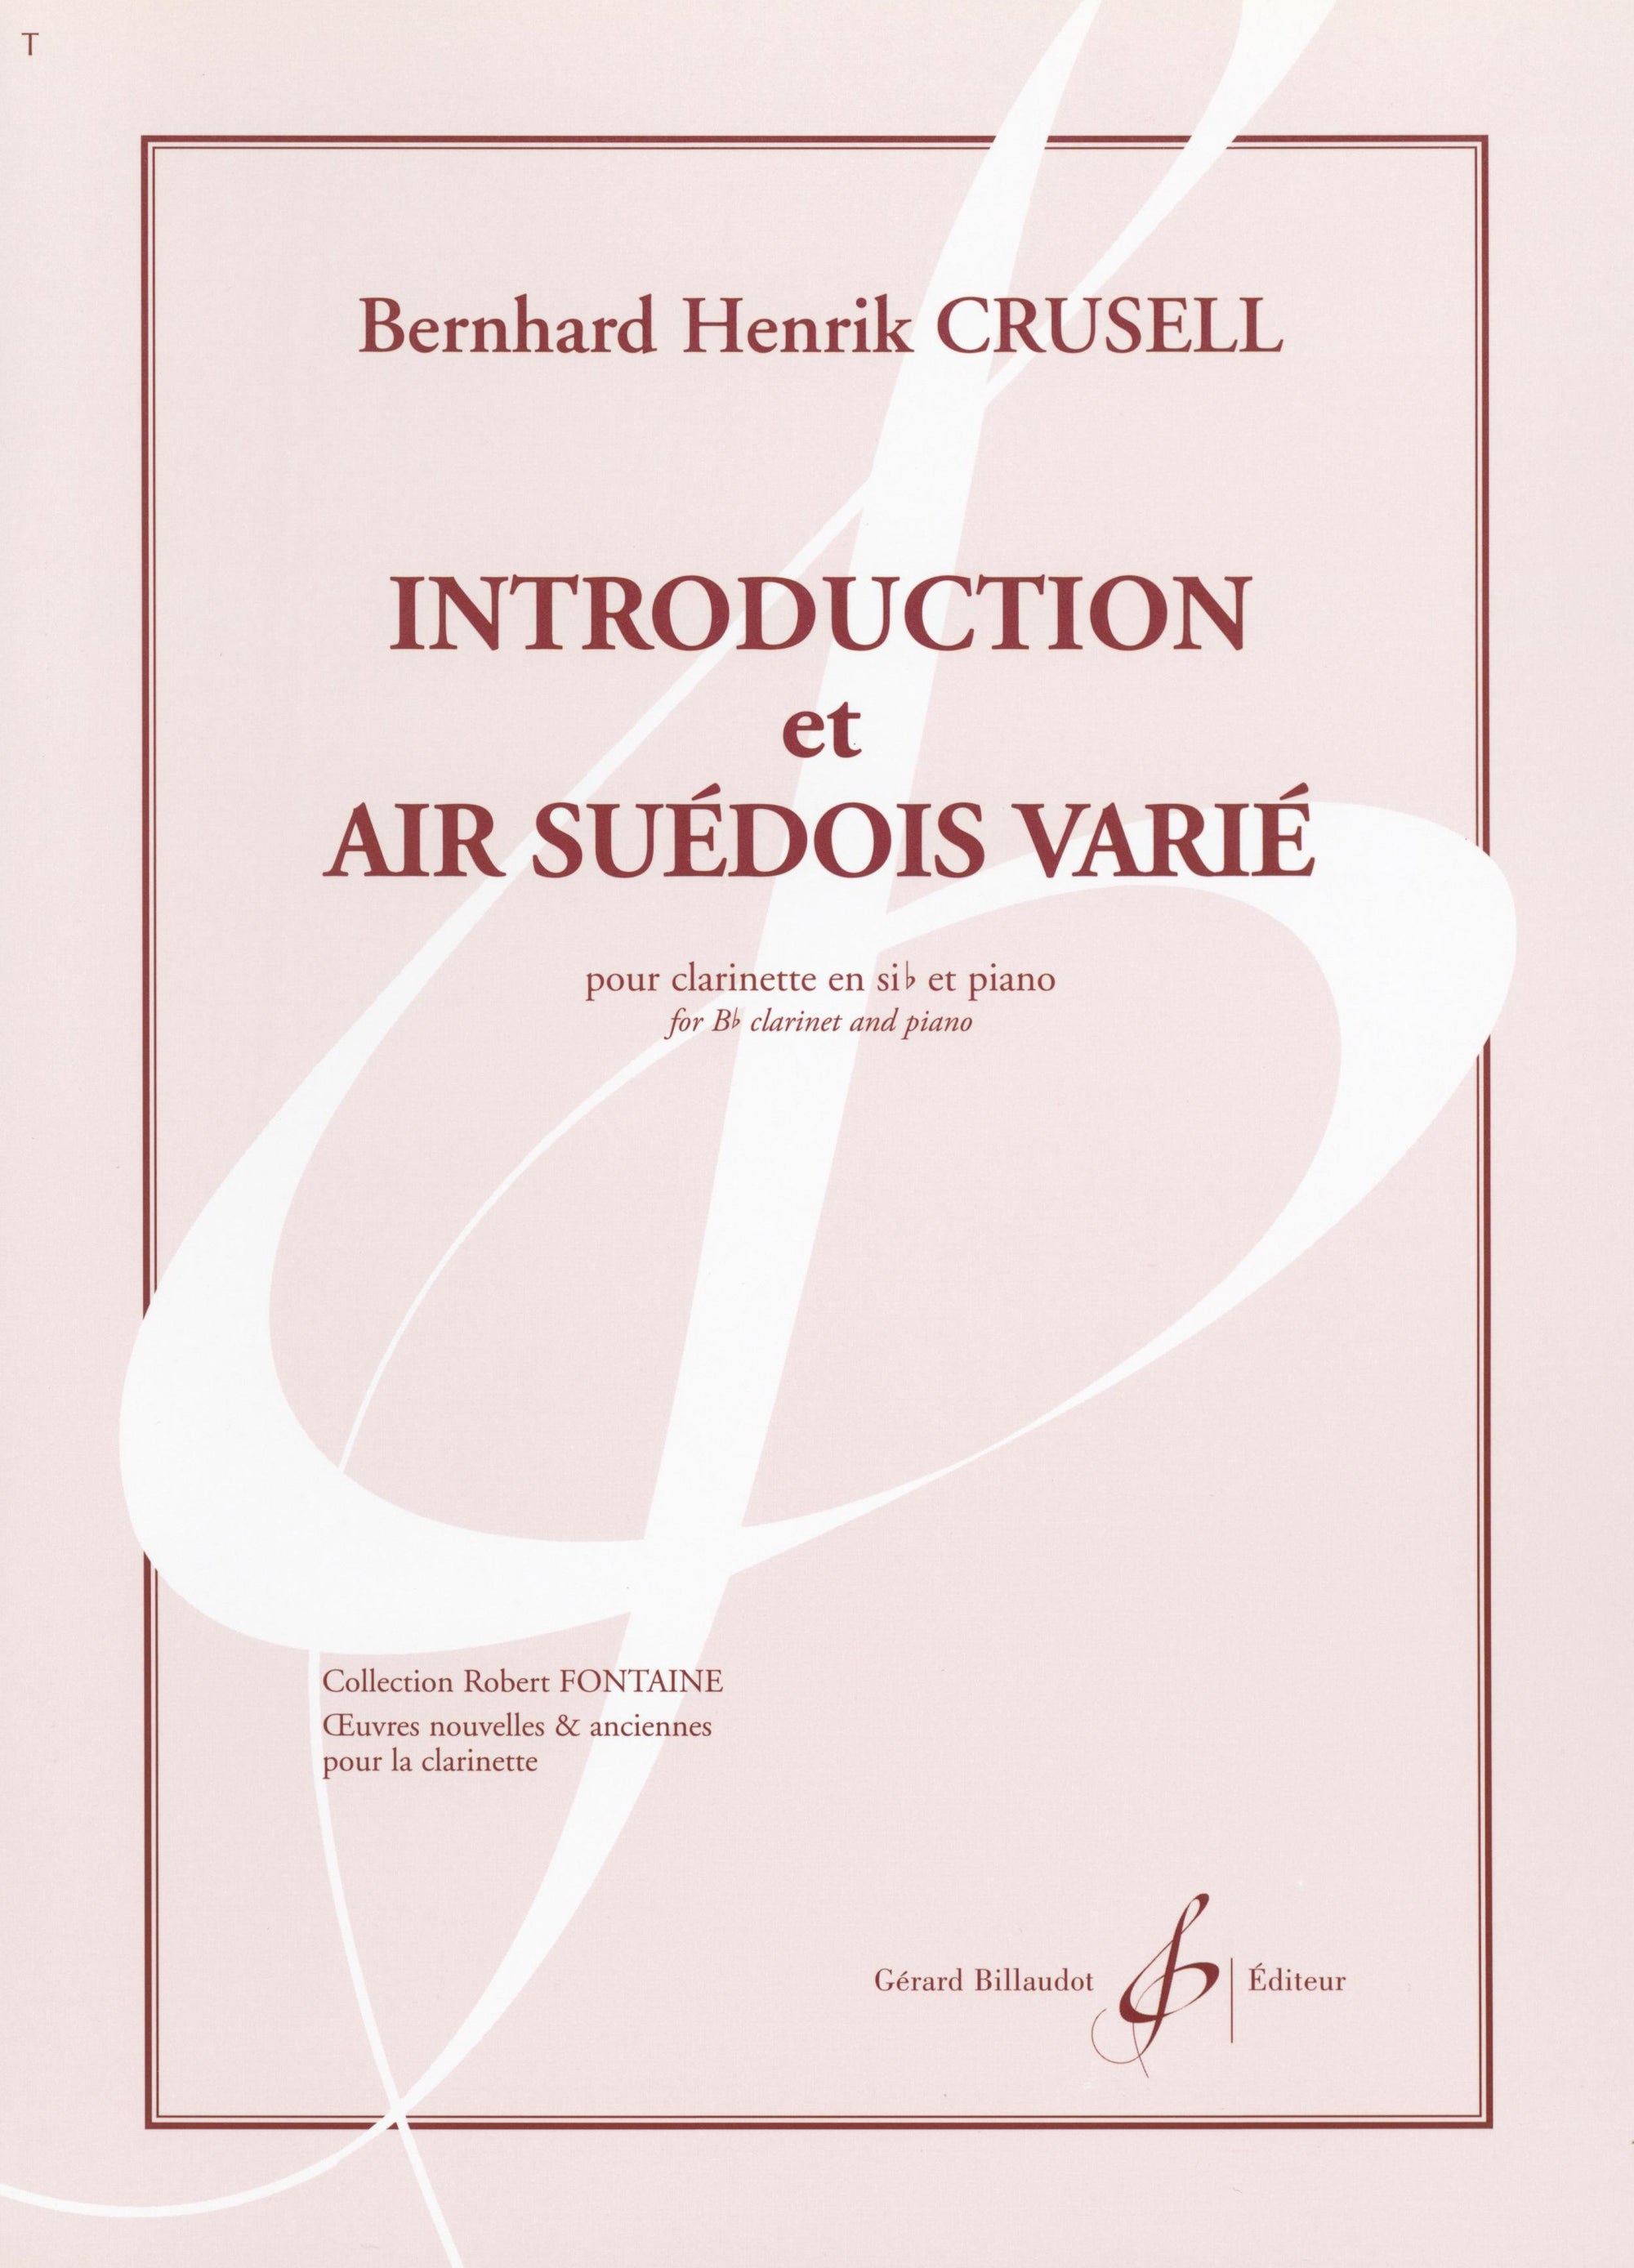 Crusell: Introduction et Air suédois varié, Op. 12